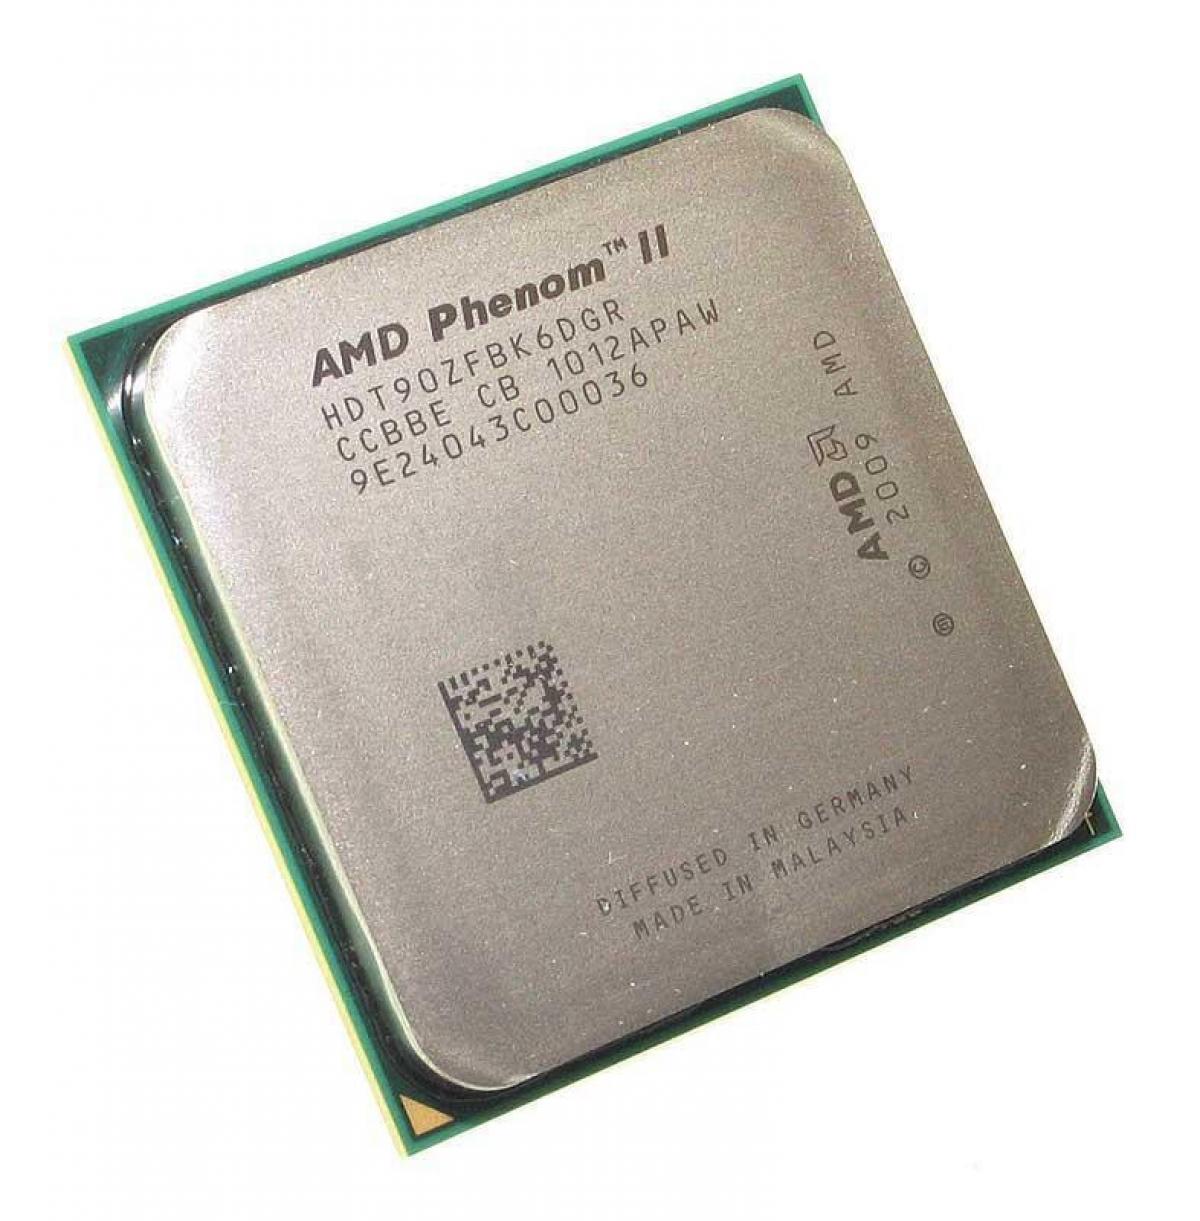 Amd phenom x6 1090t. AMD Phenom 2 x6 1090t. AMD Phenom II x6 1090t Black Edition. Процессор Phenom II x6. AMD Phenom II 1090t.